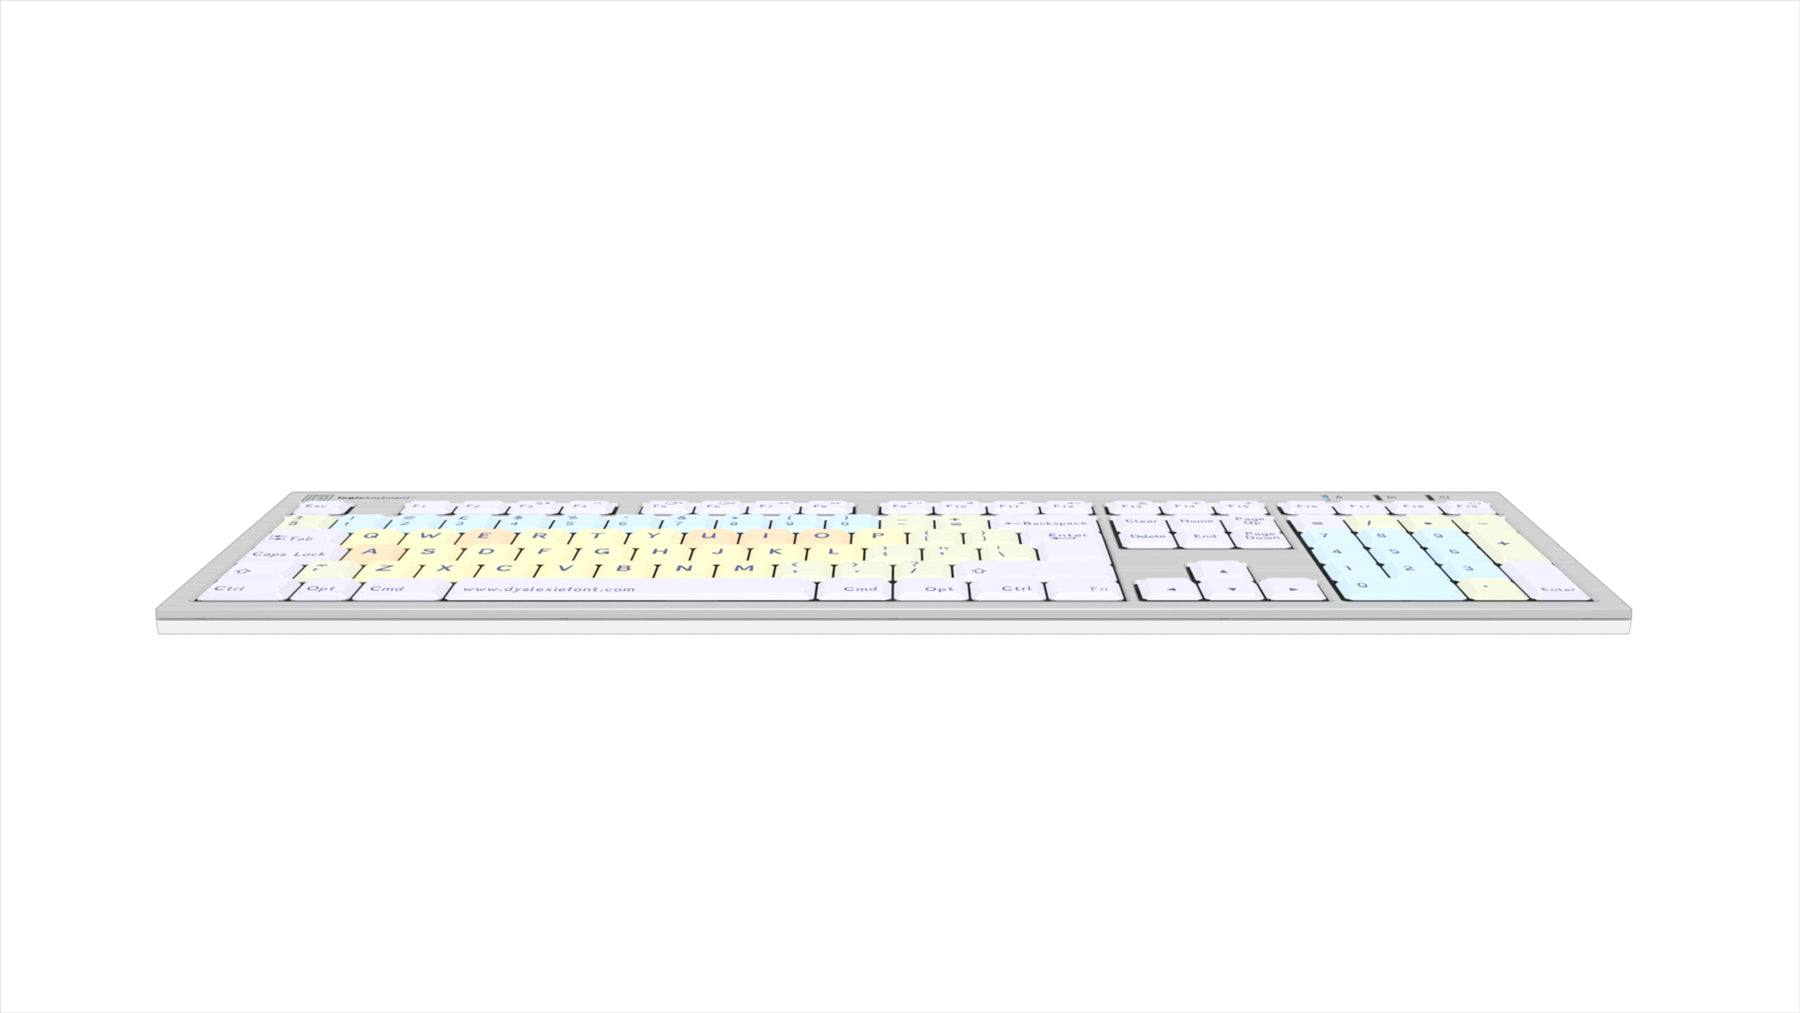 Dyslexie keyboard ALBA Mac UK